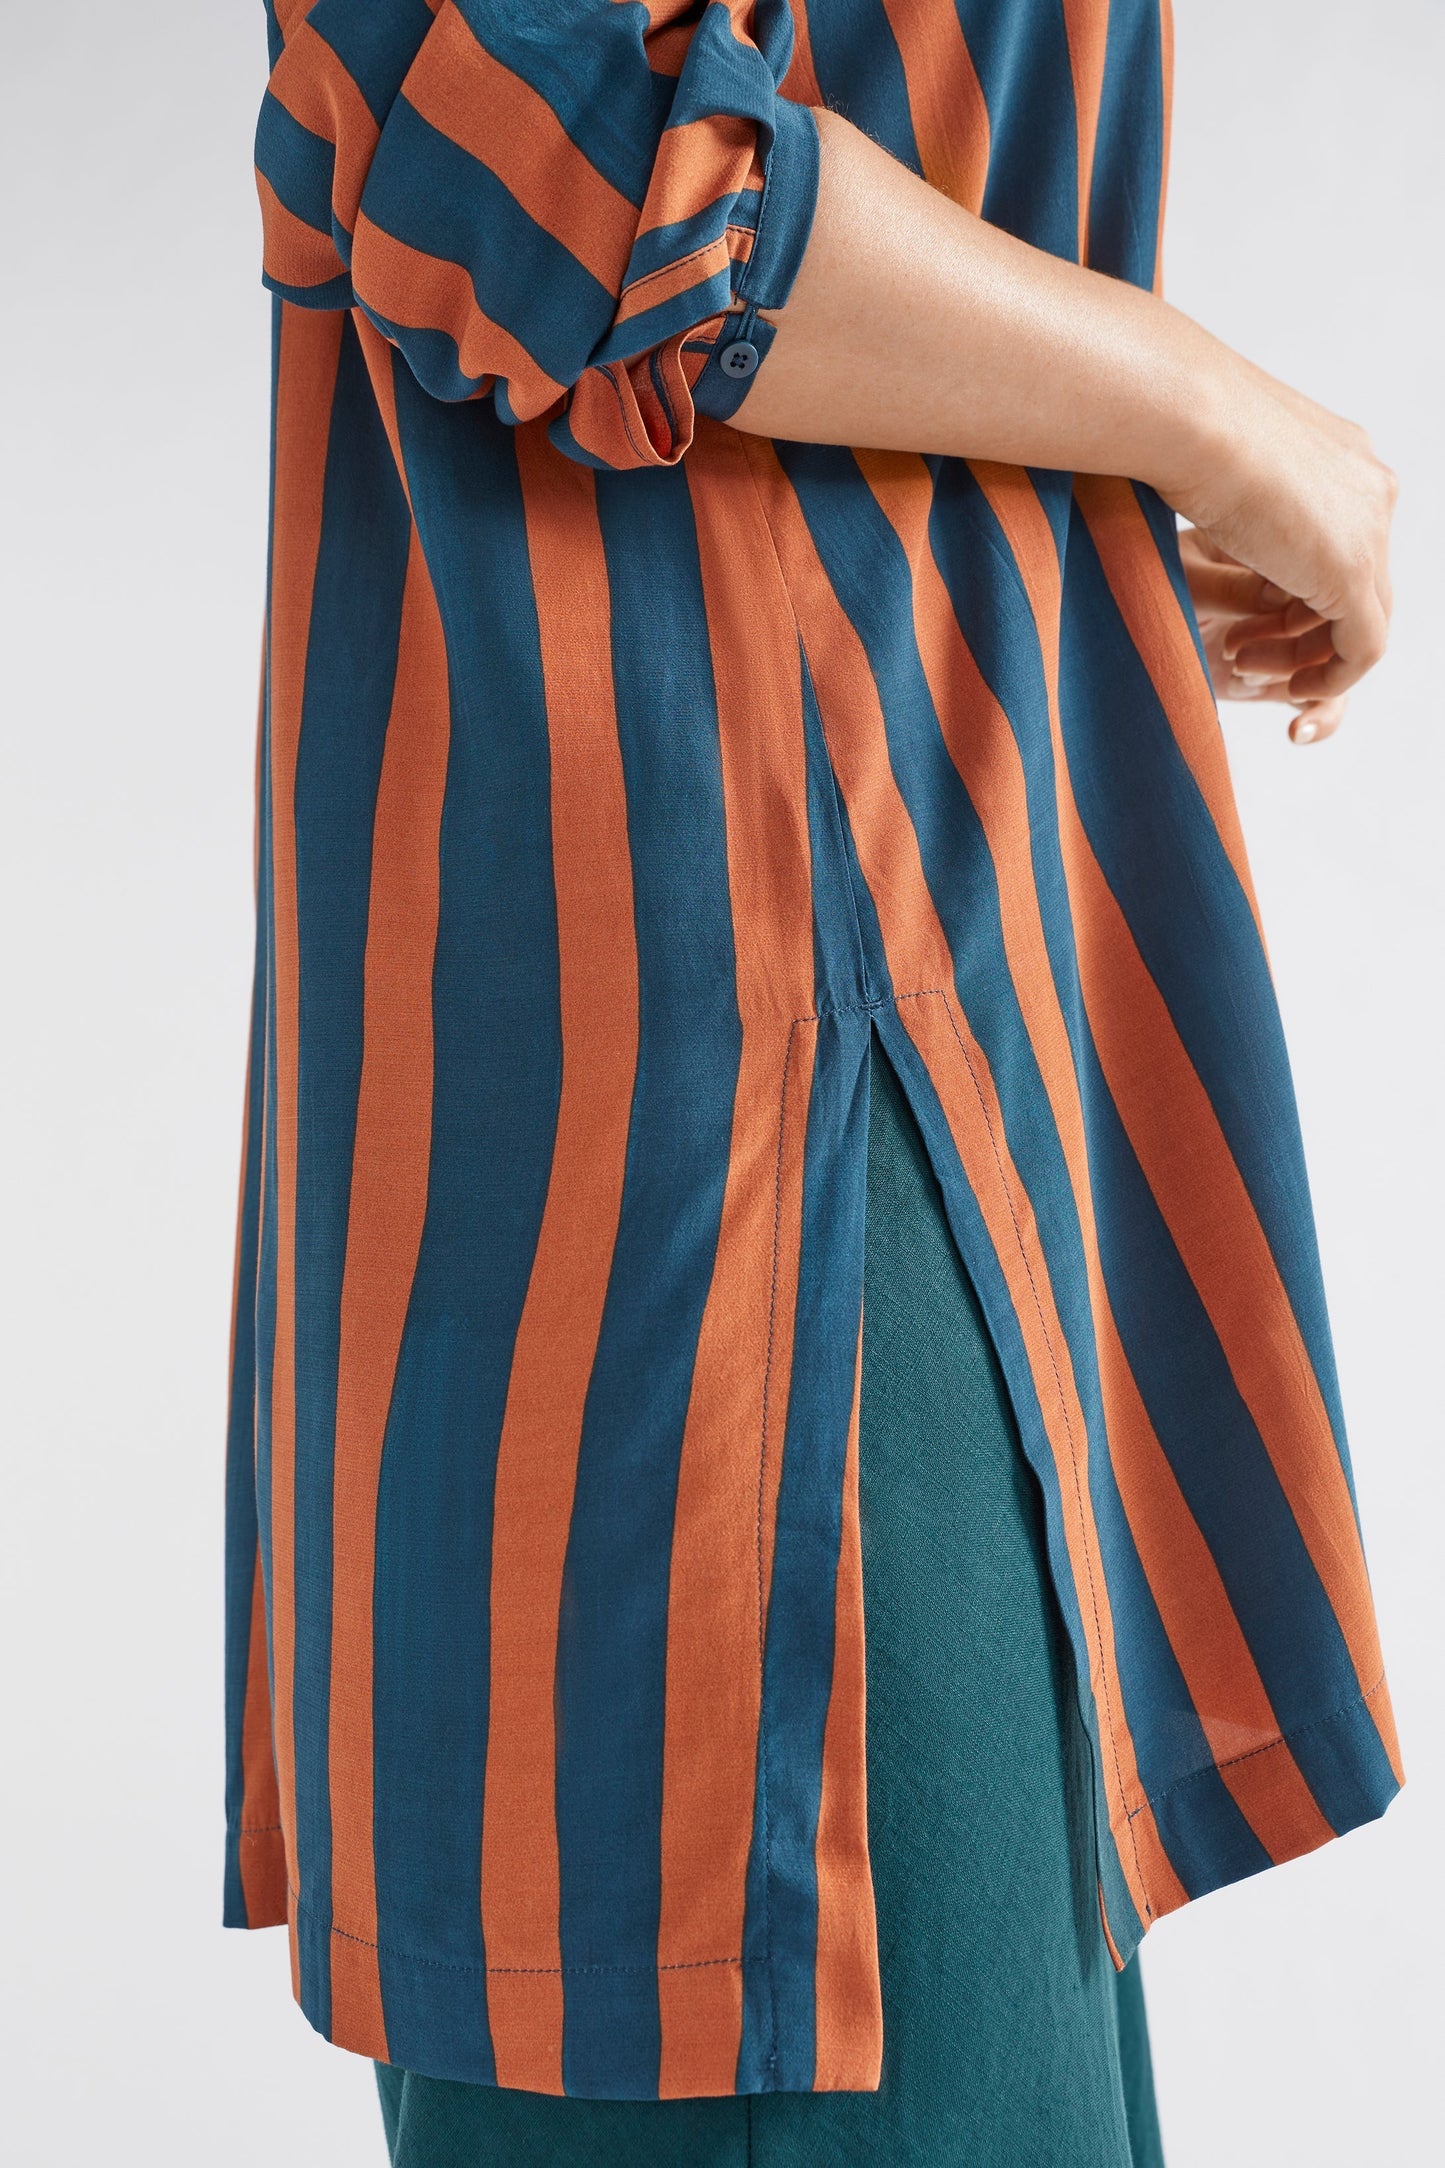 Tilbe Silky Striped Long Shirt Model side Detail | BRONZE TEAL PAINT STRIPE